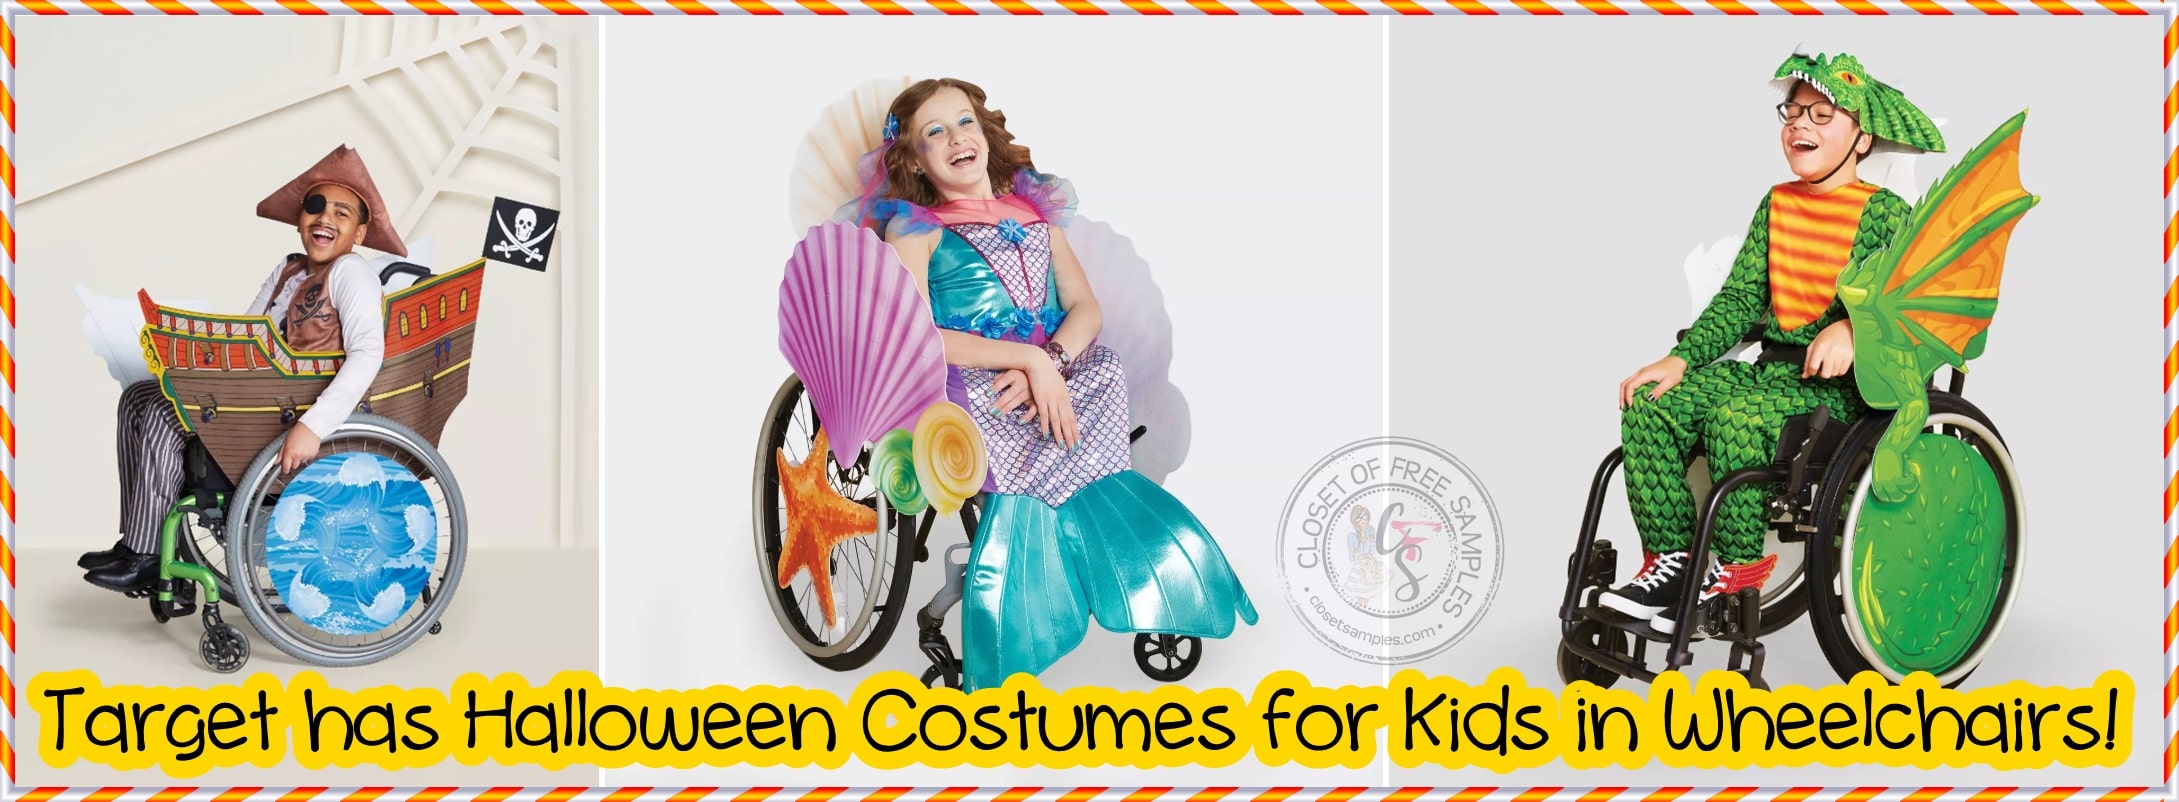 Target-has-Halloween-Costumes-for-Kids-in-Wheelchairs-closetsamples.jpg